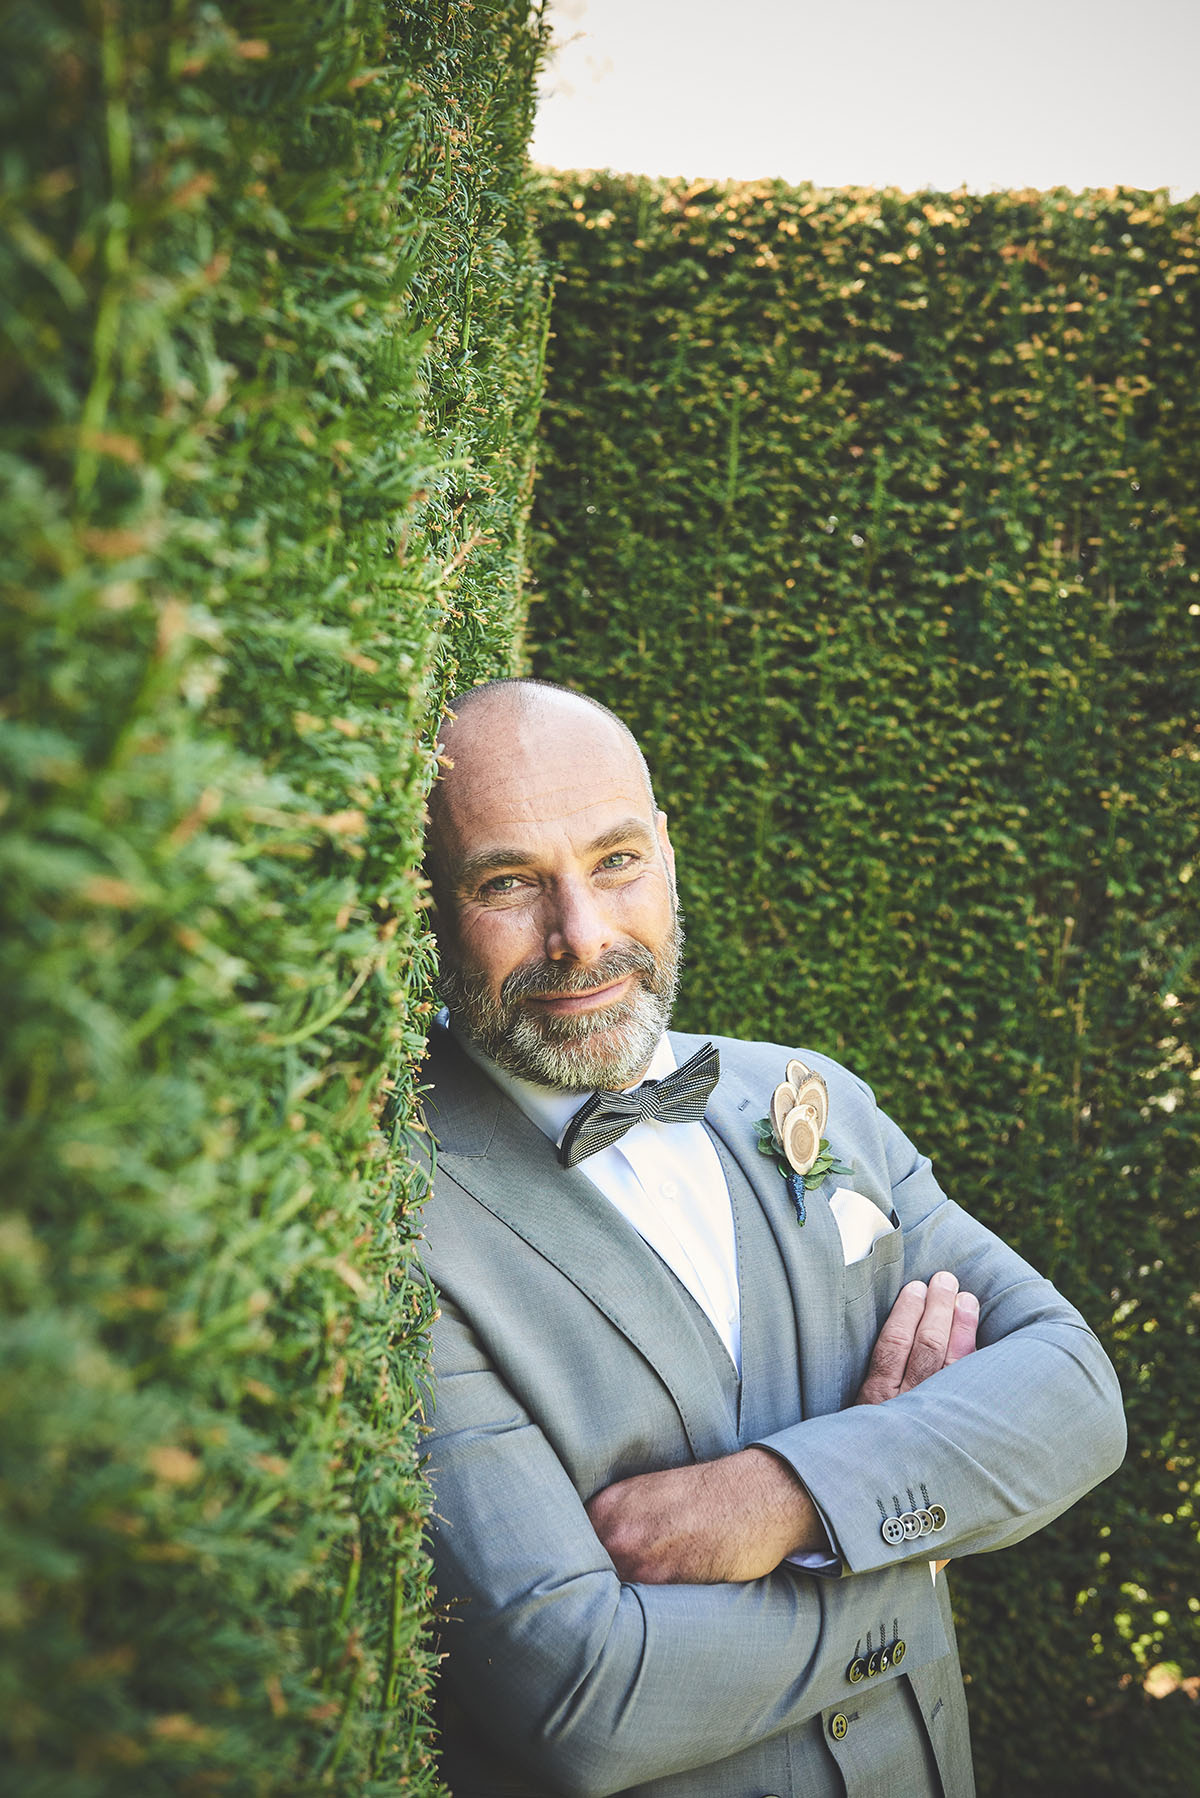 Secret garden wedding inspiration two grooms grey suit blue suit bow ties castle Netherlands